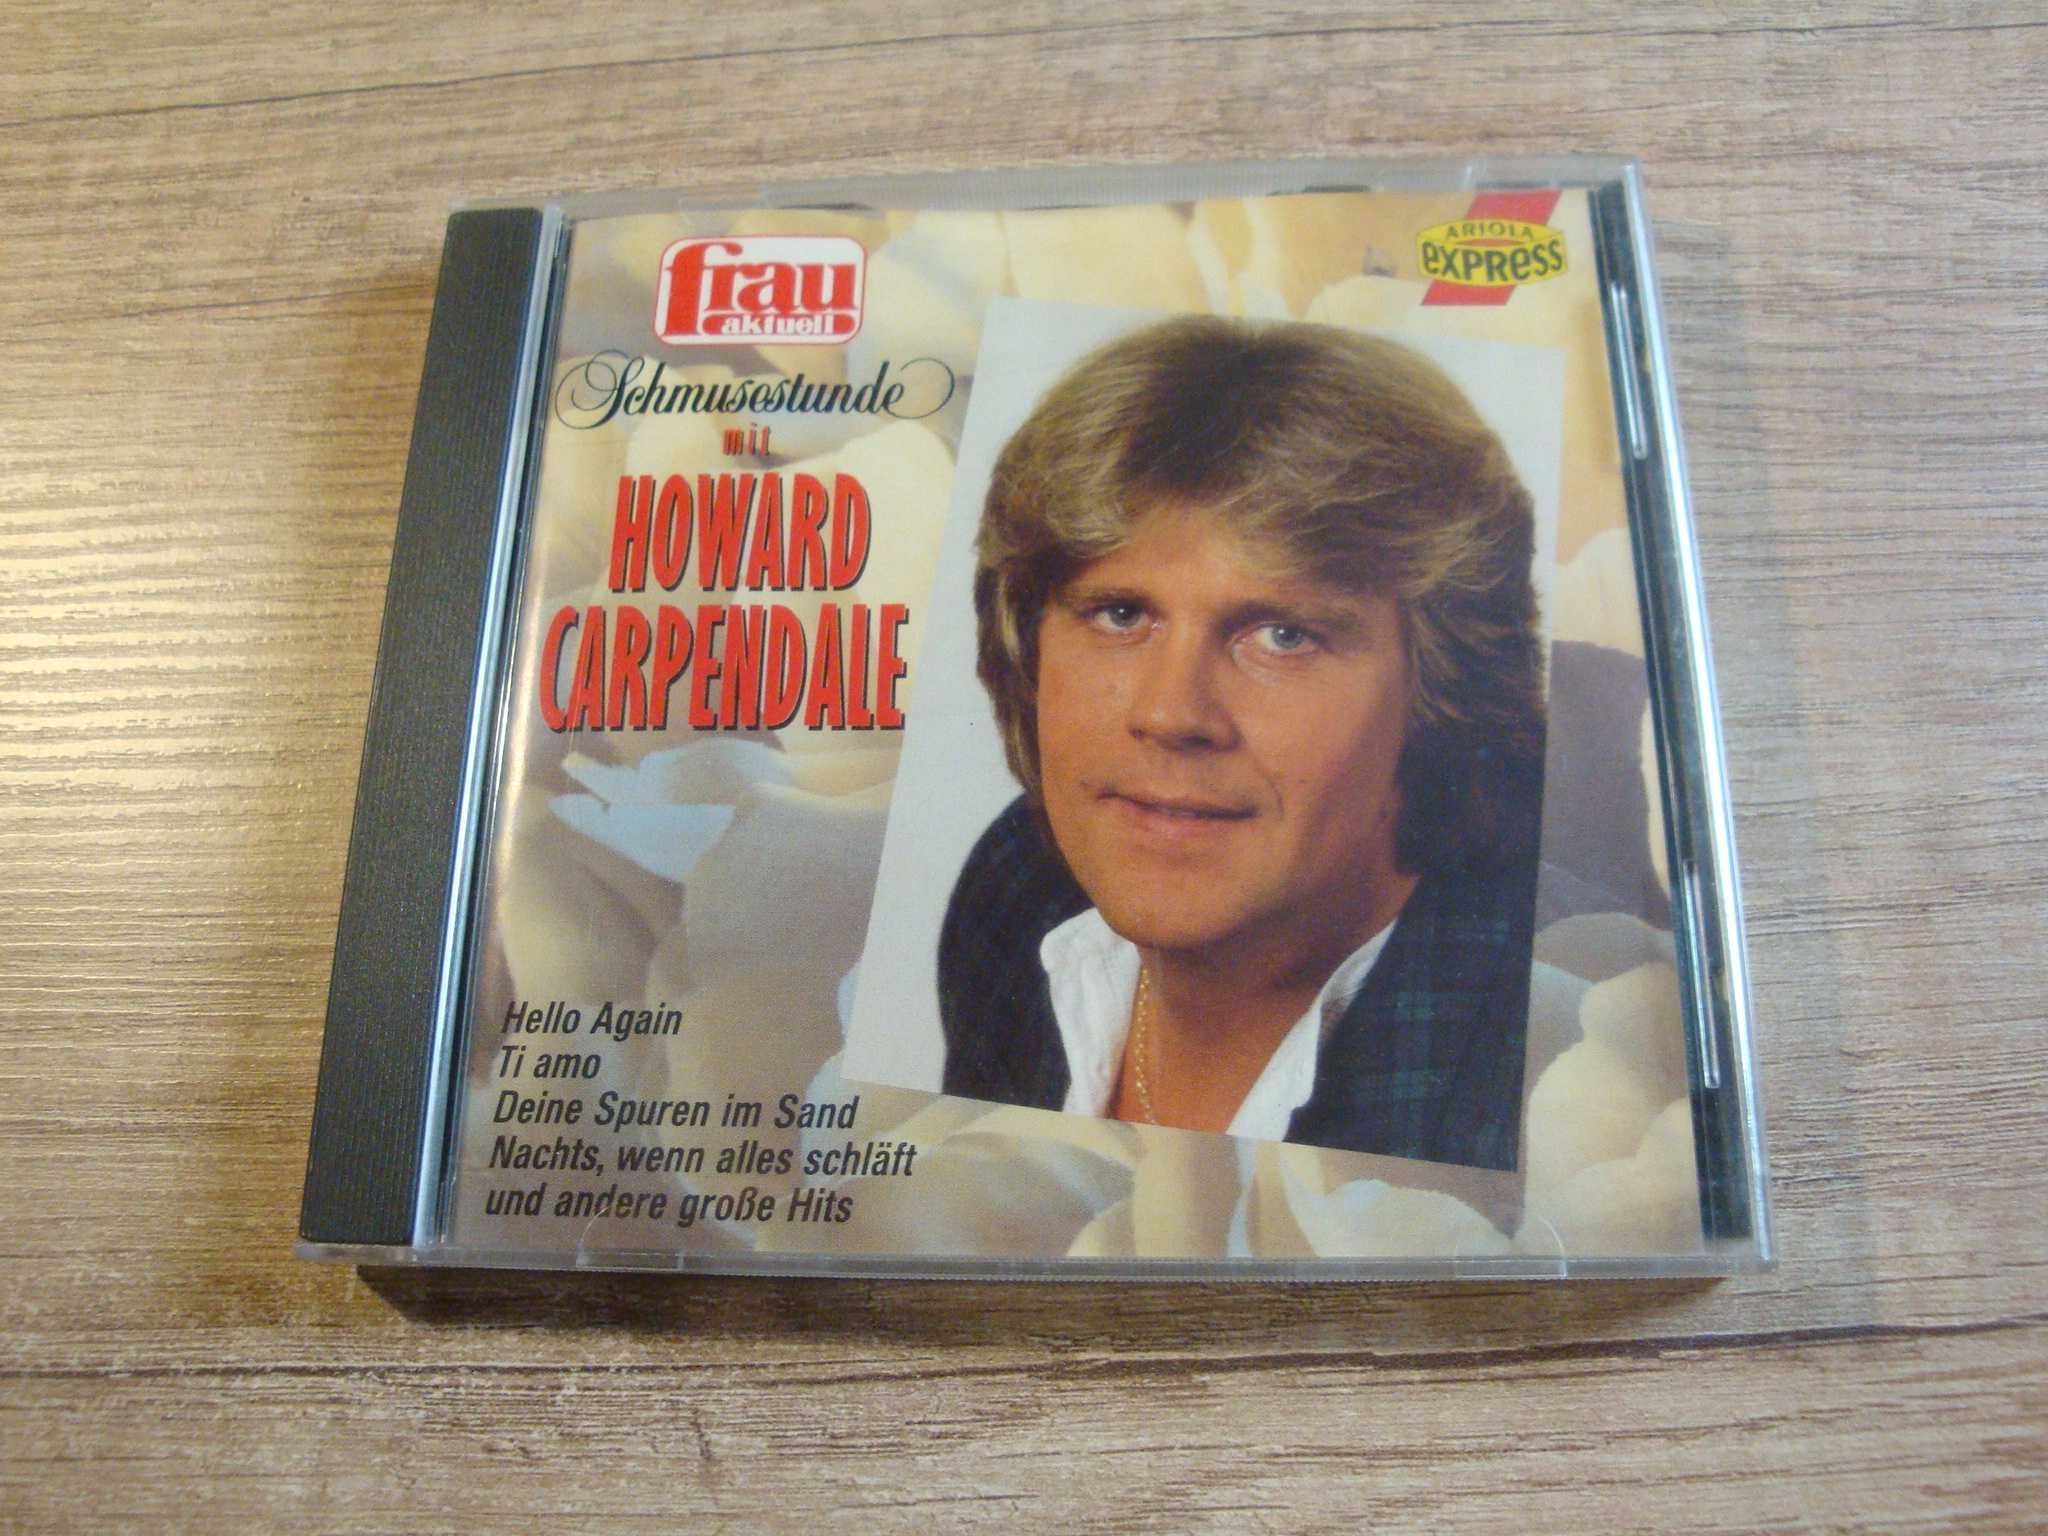 Howard Carpendale ‎– Schmusestunde Mit Howard Carpendale